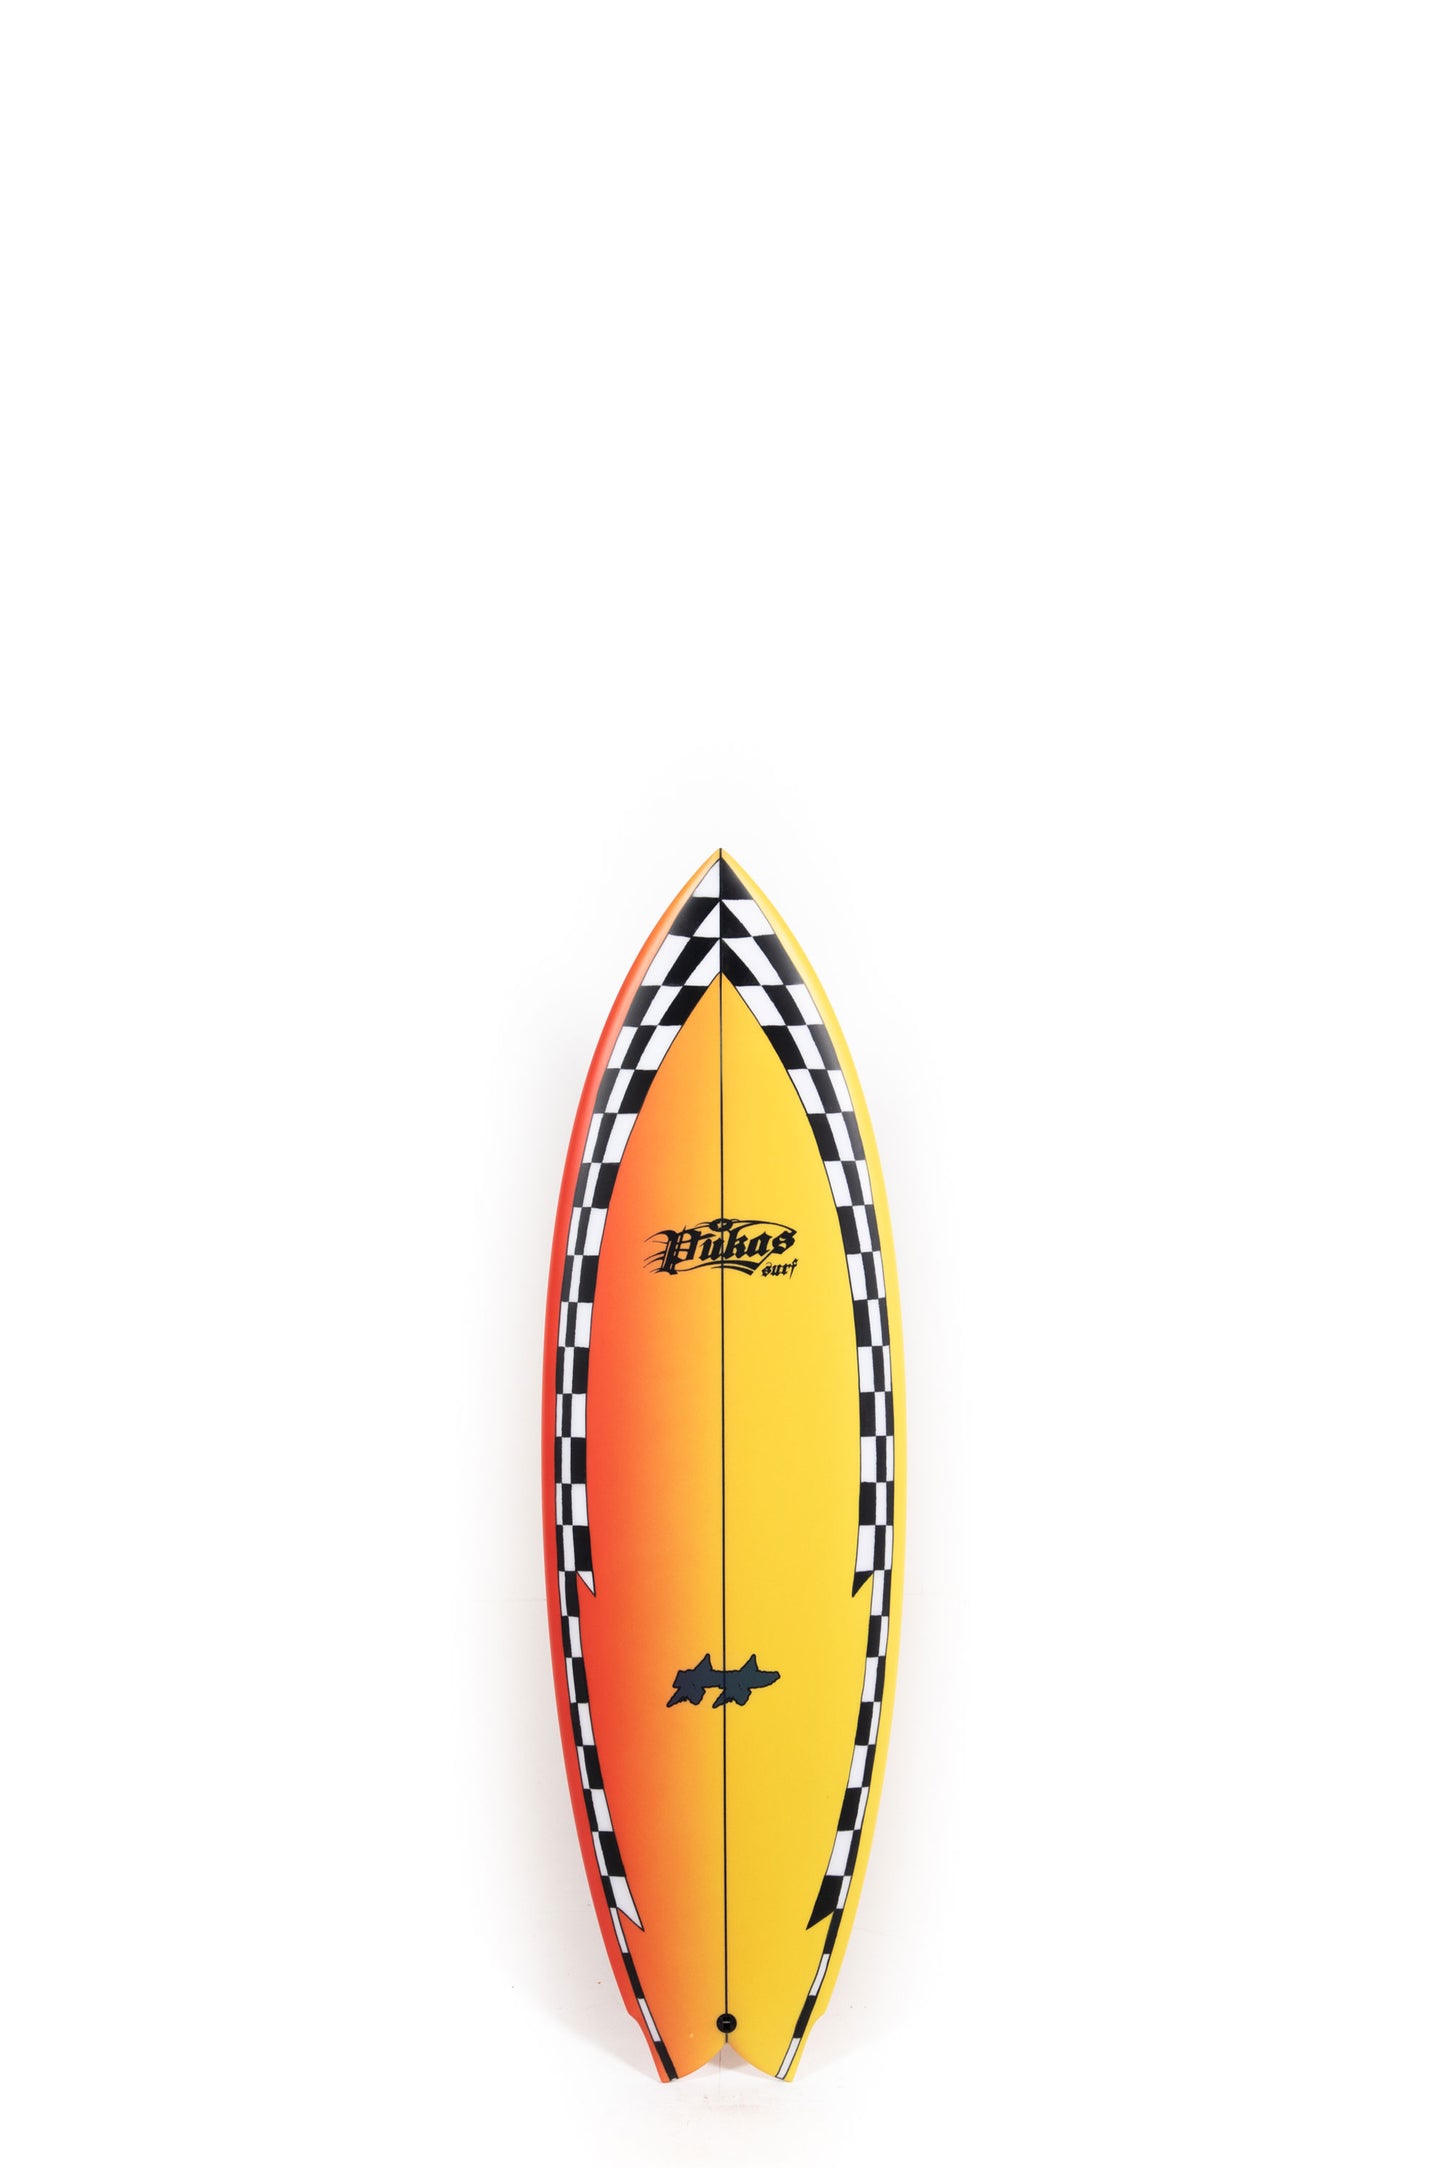 Pukas-Surf-Shop-Pukas-Surfboards-x-TwoJeys-Moustache-by-David-Santos-5_4